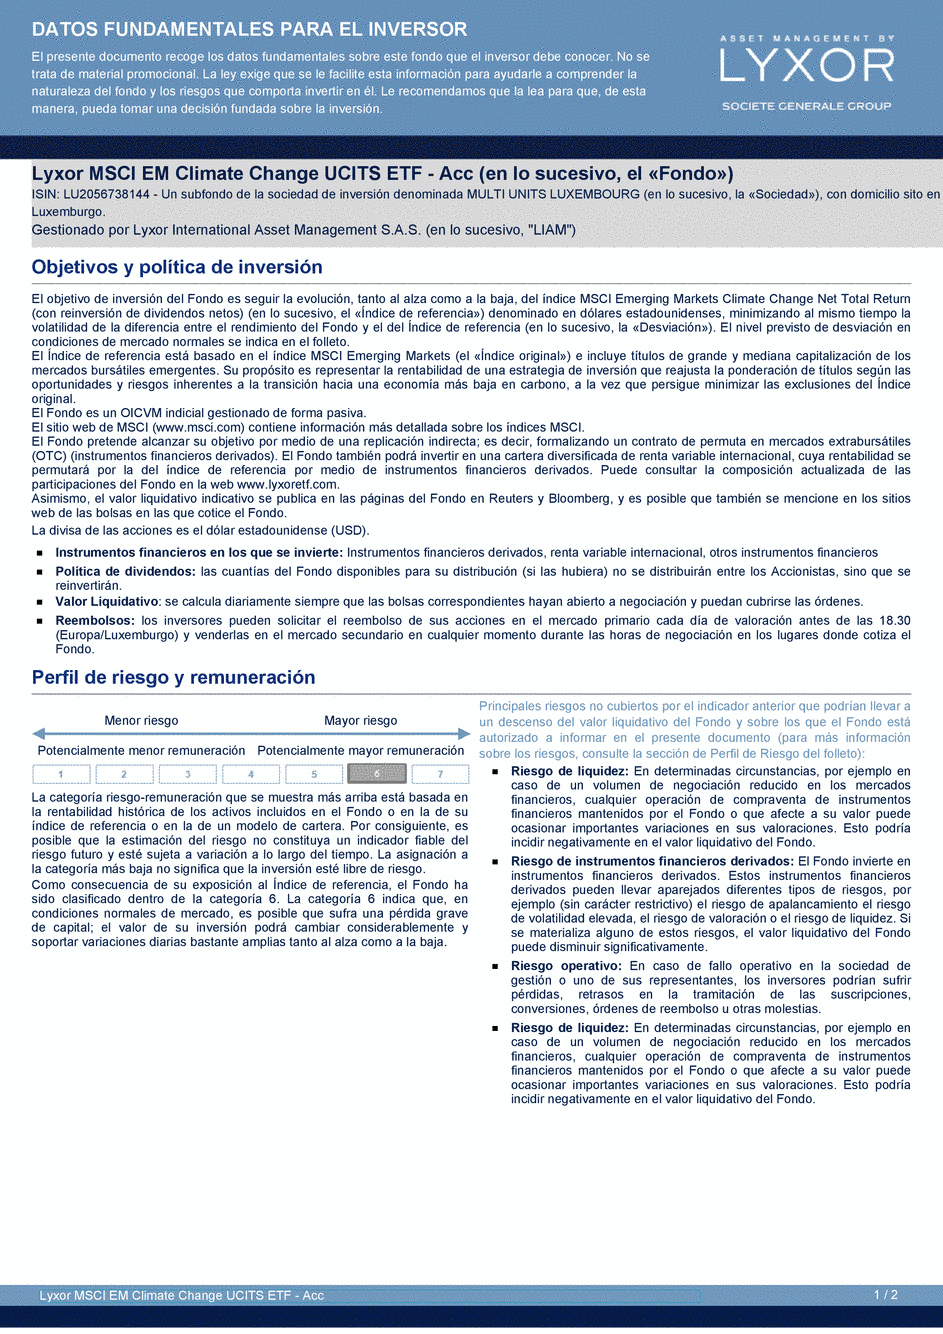 DICI Lyxor MSCI EM Climate Change UCITS ETF - Acc - 25/03/2020 - Espagnol